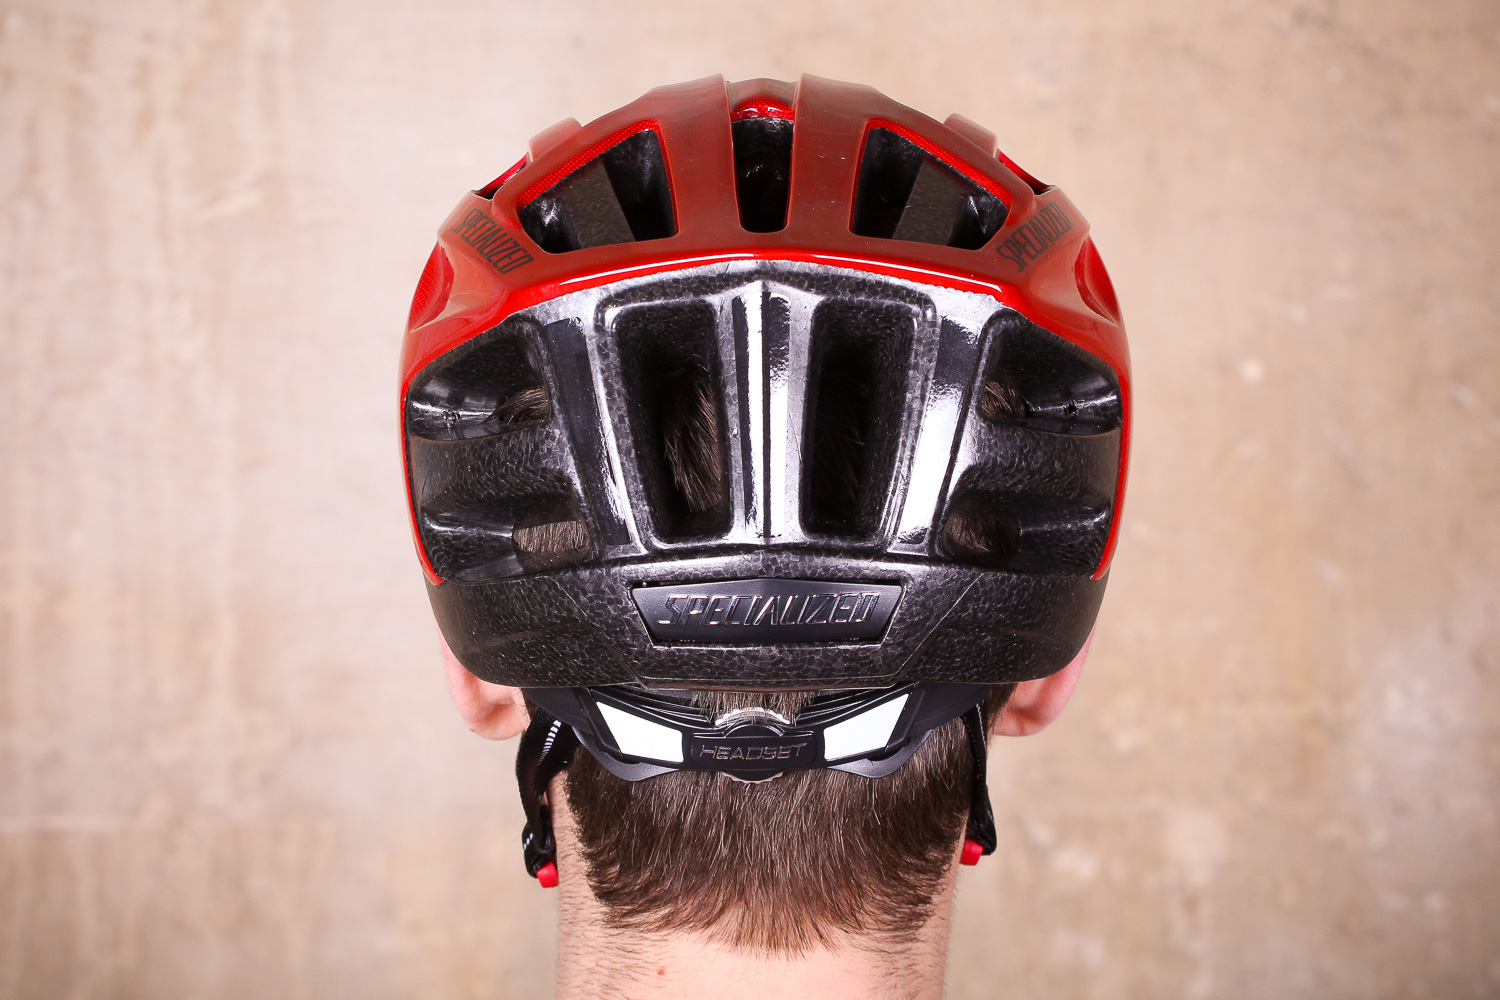 specialized helmet align